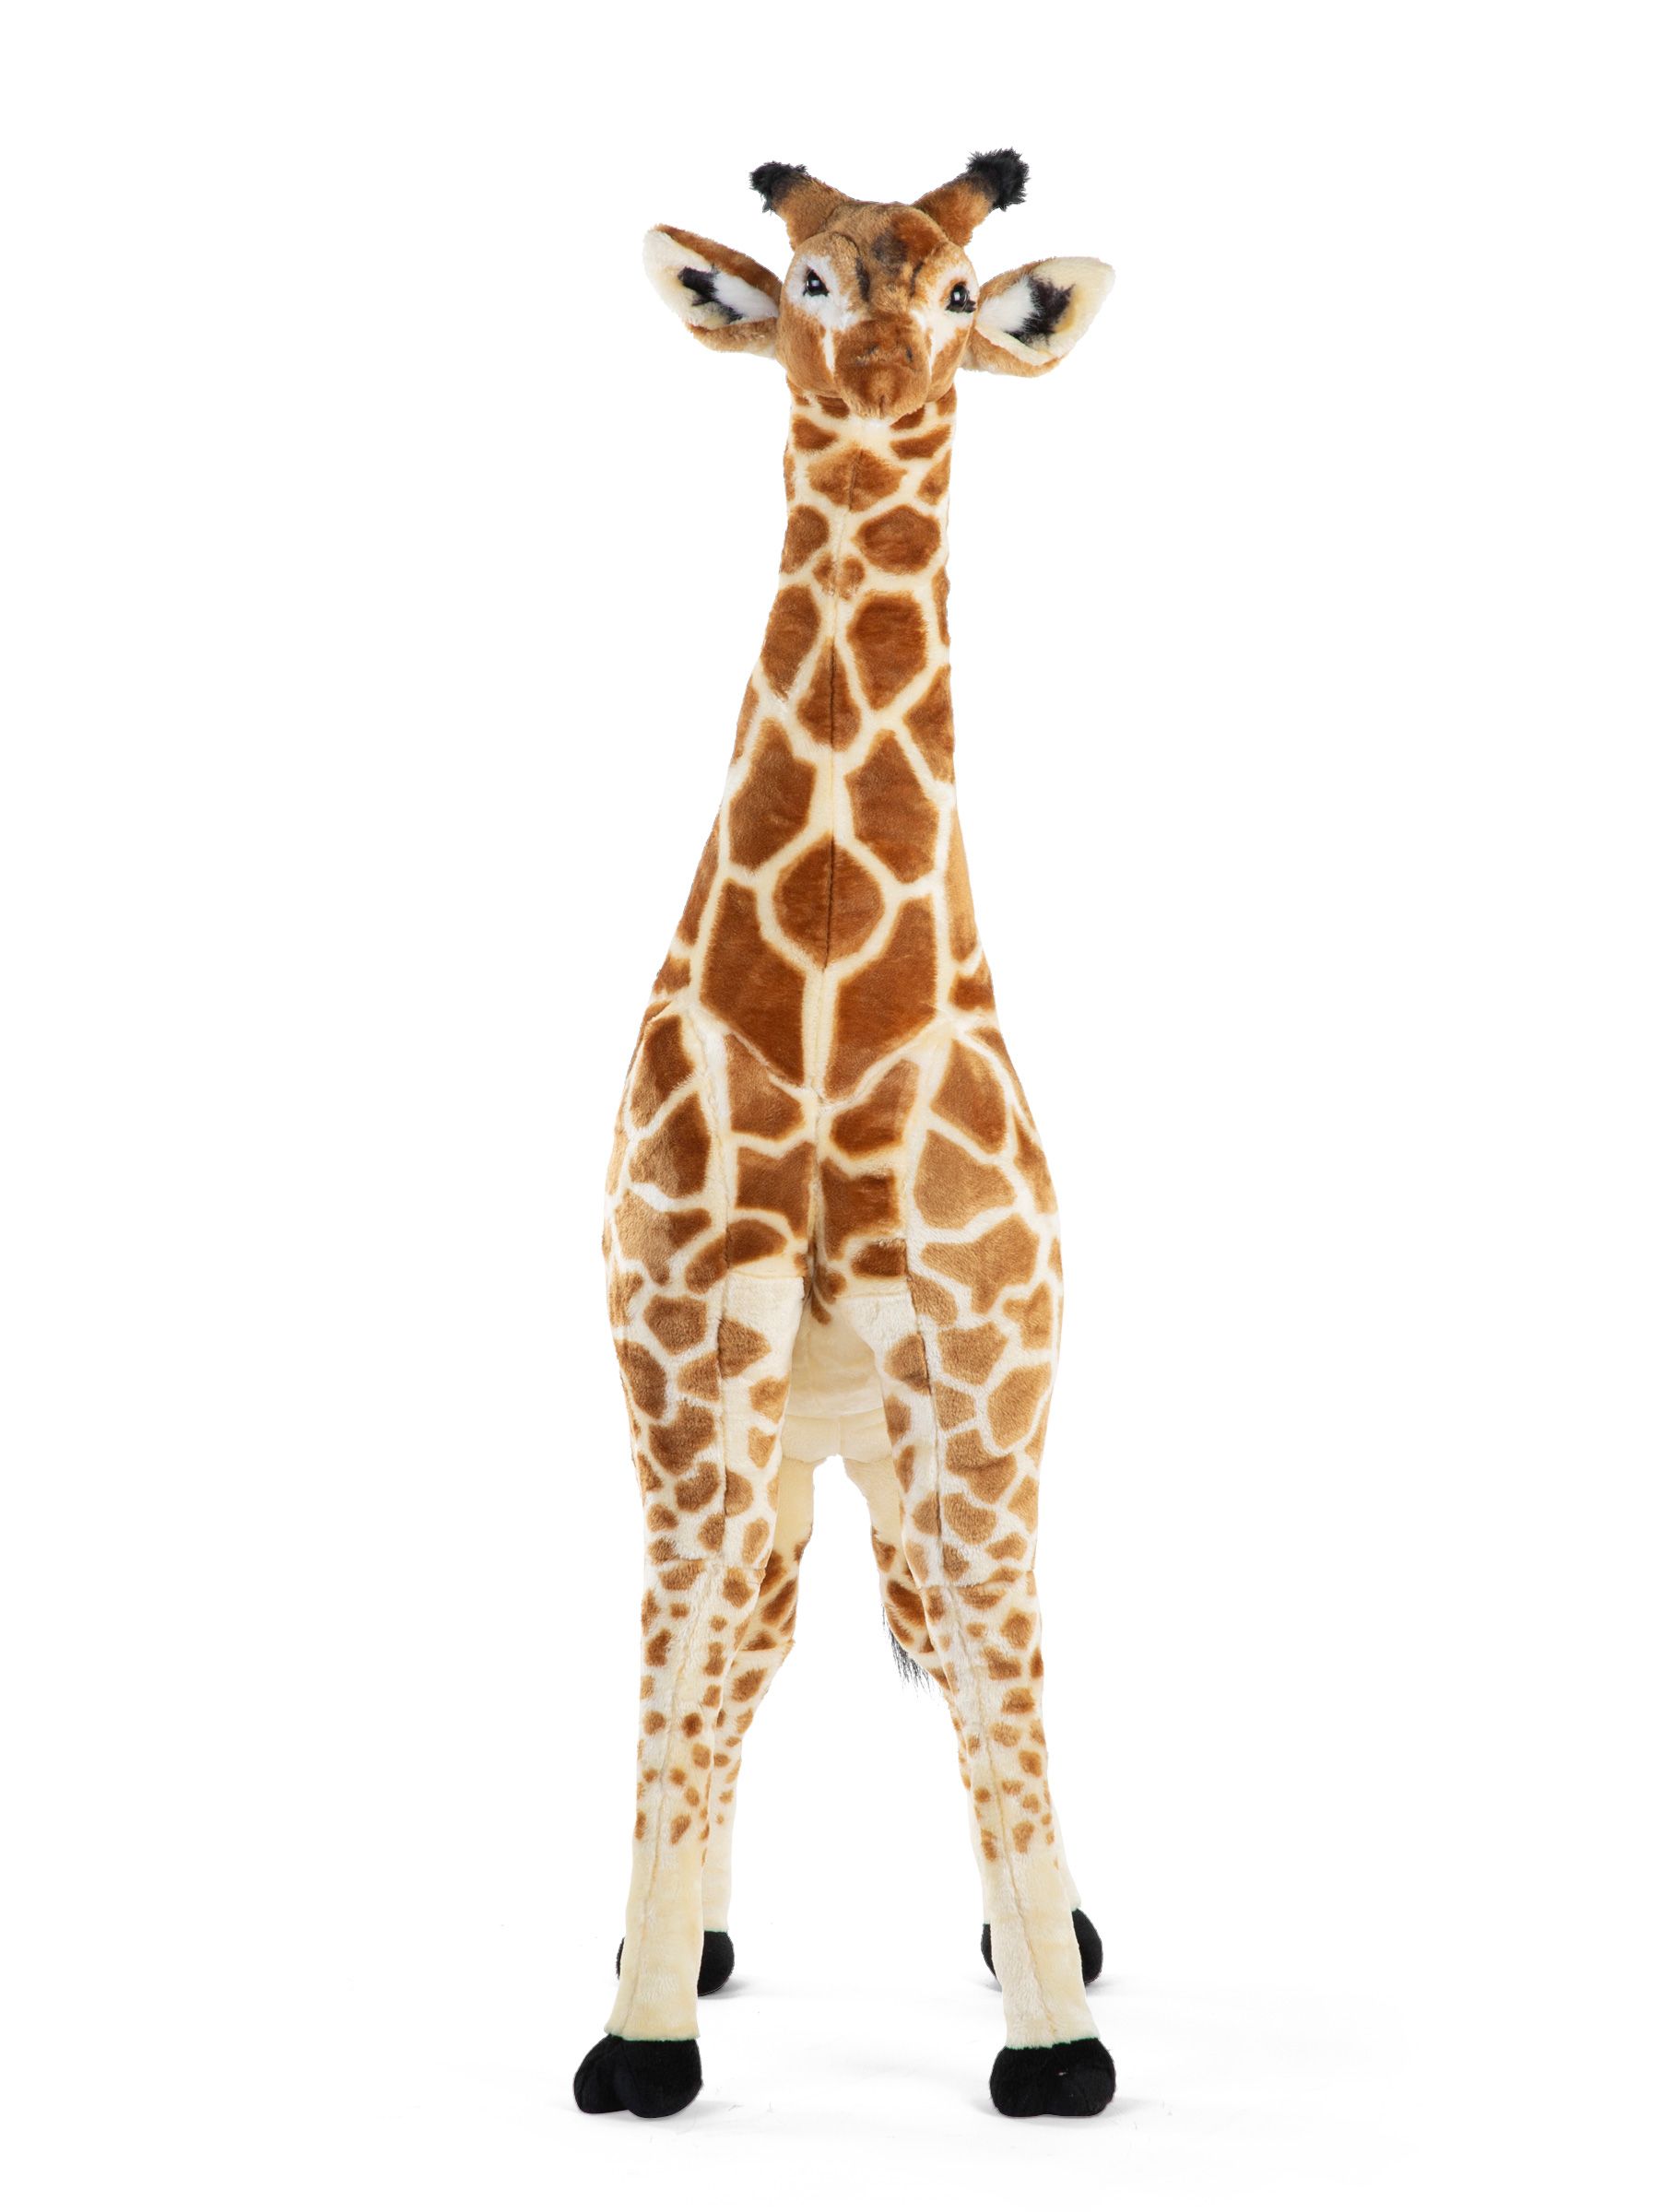 Peluche Girafe debout 55 cm